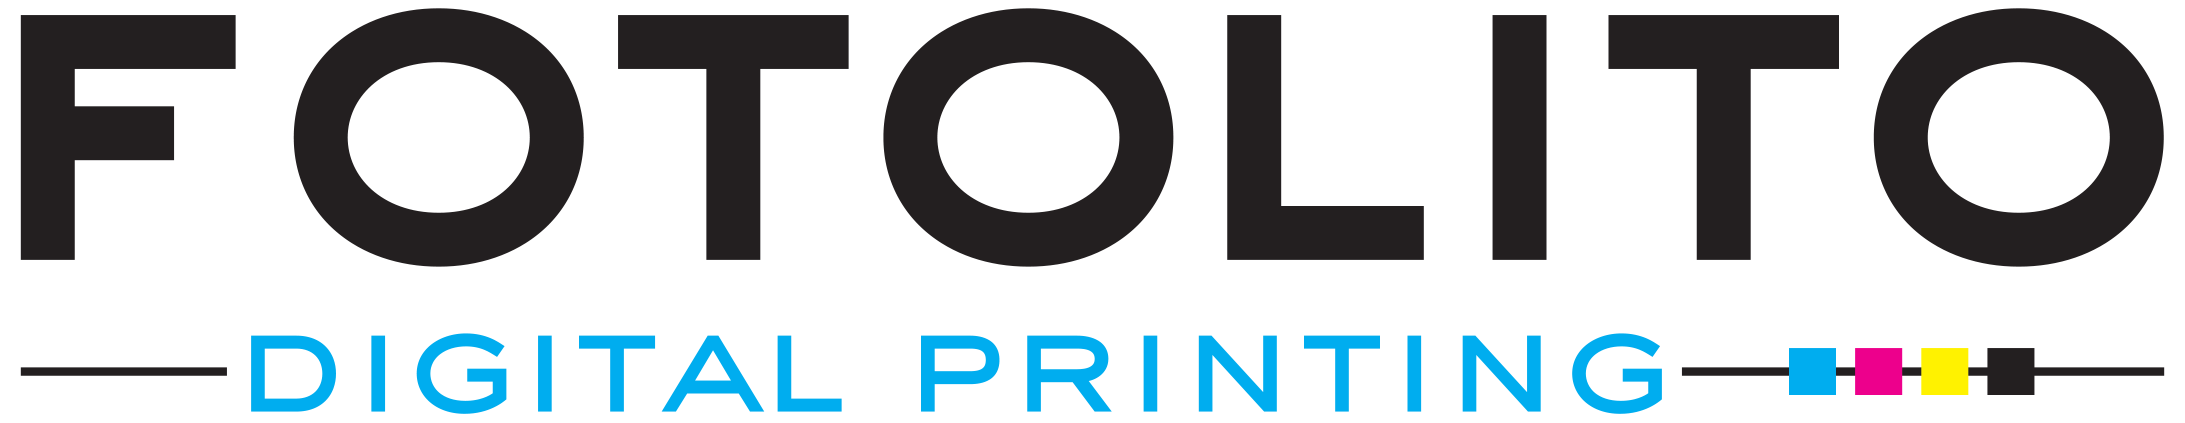 Fotolito  - Digital Printing